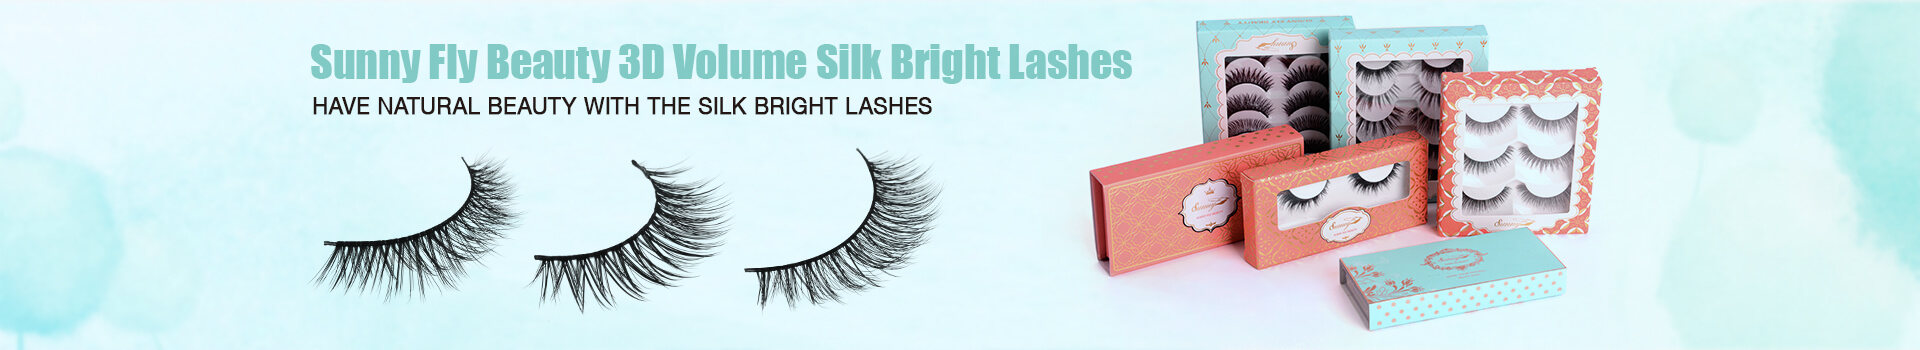 3D Volume Silk Bright Eyelashes FA45